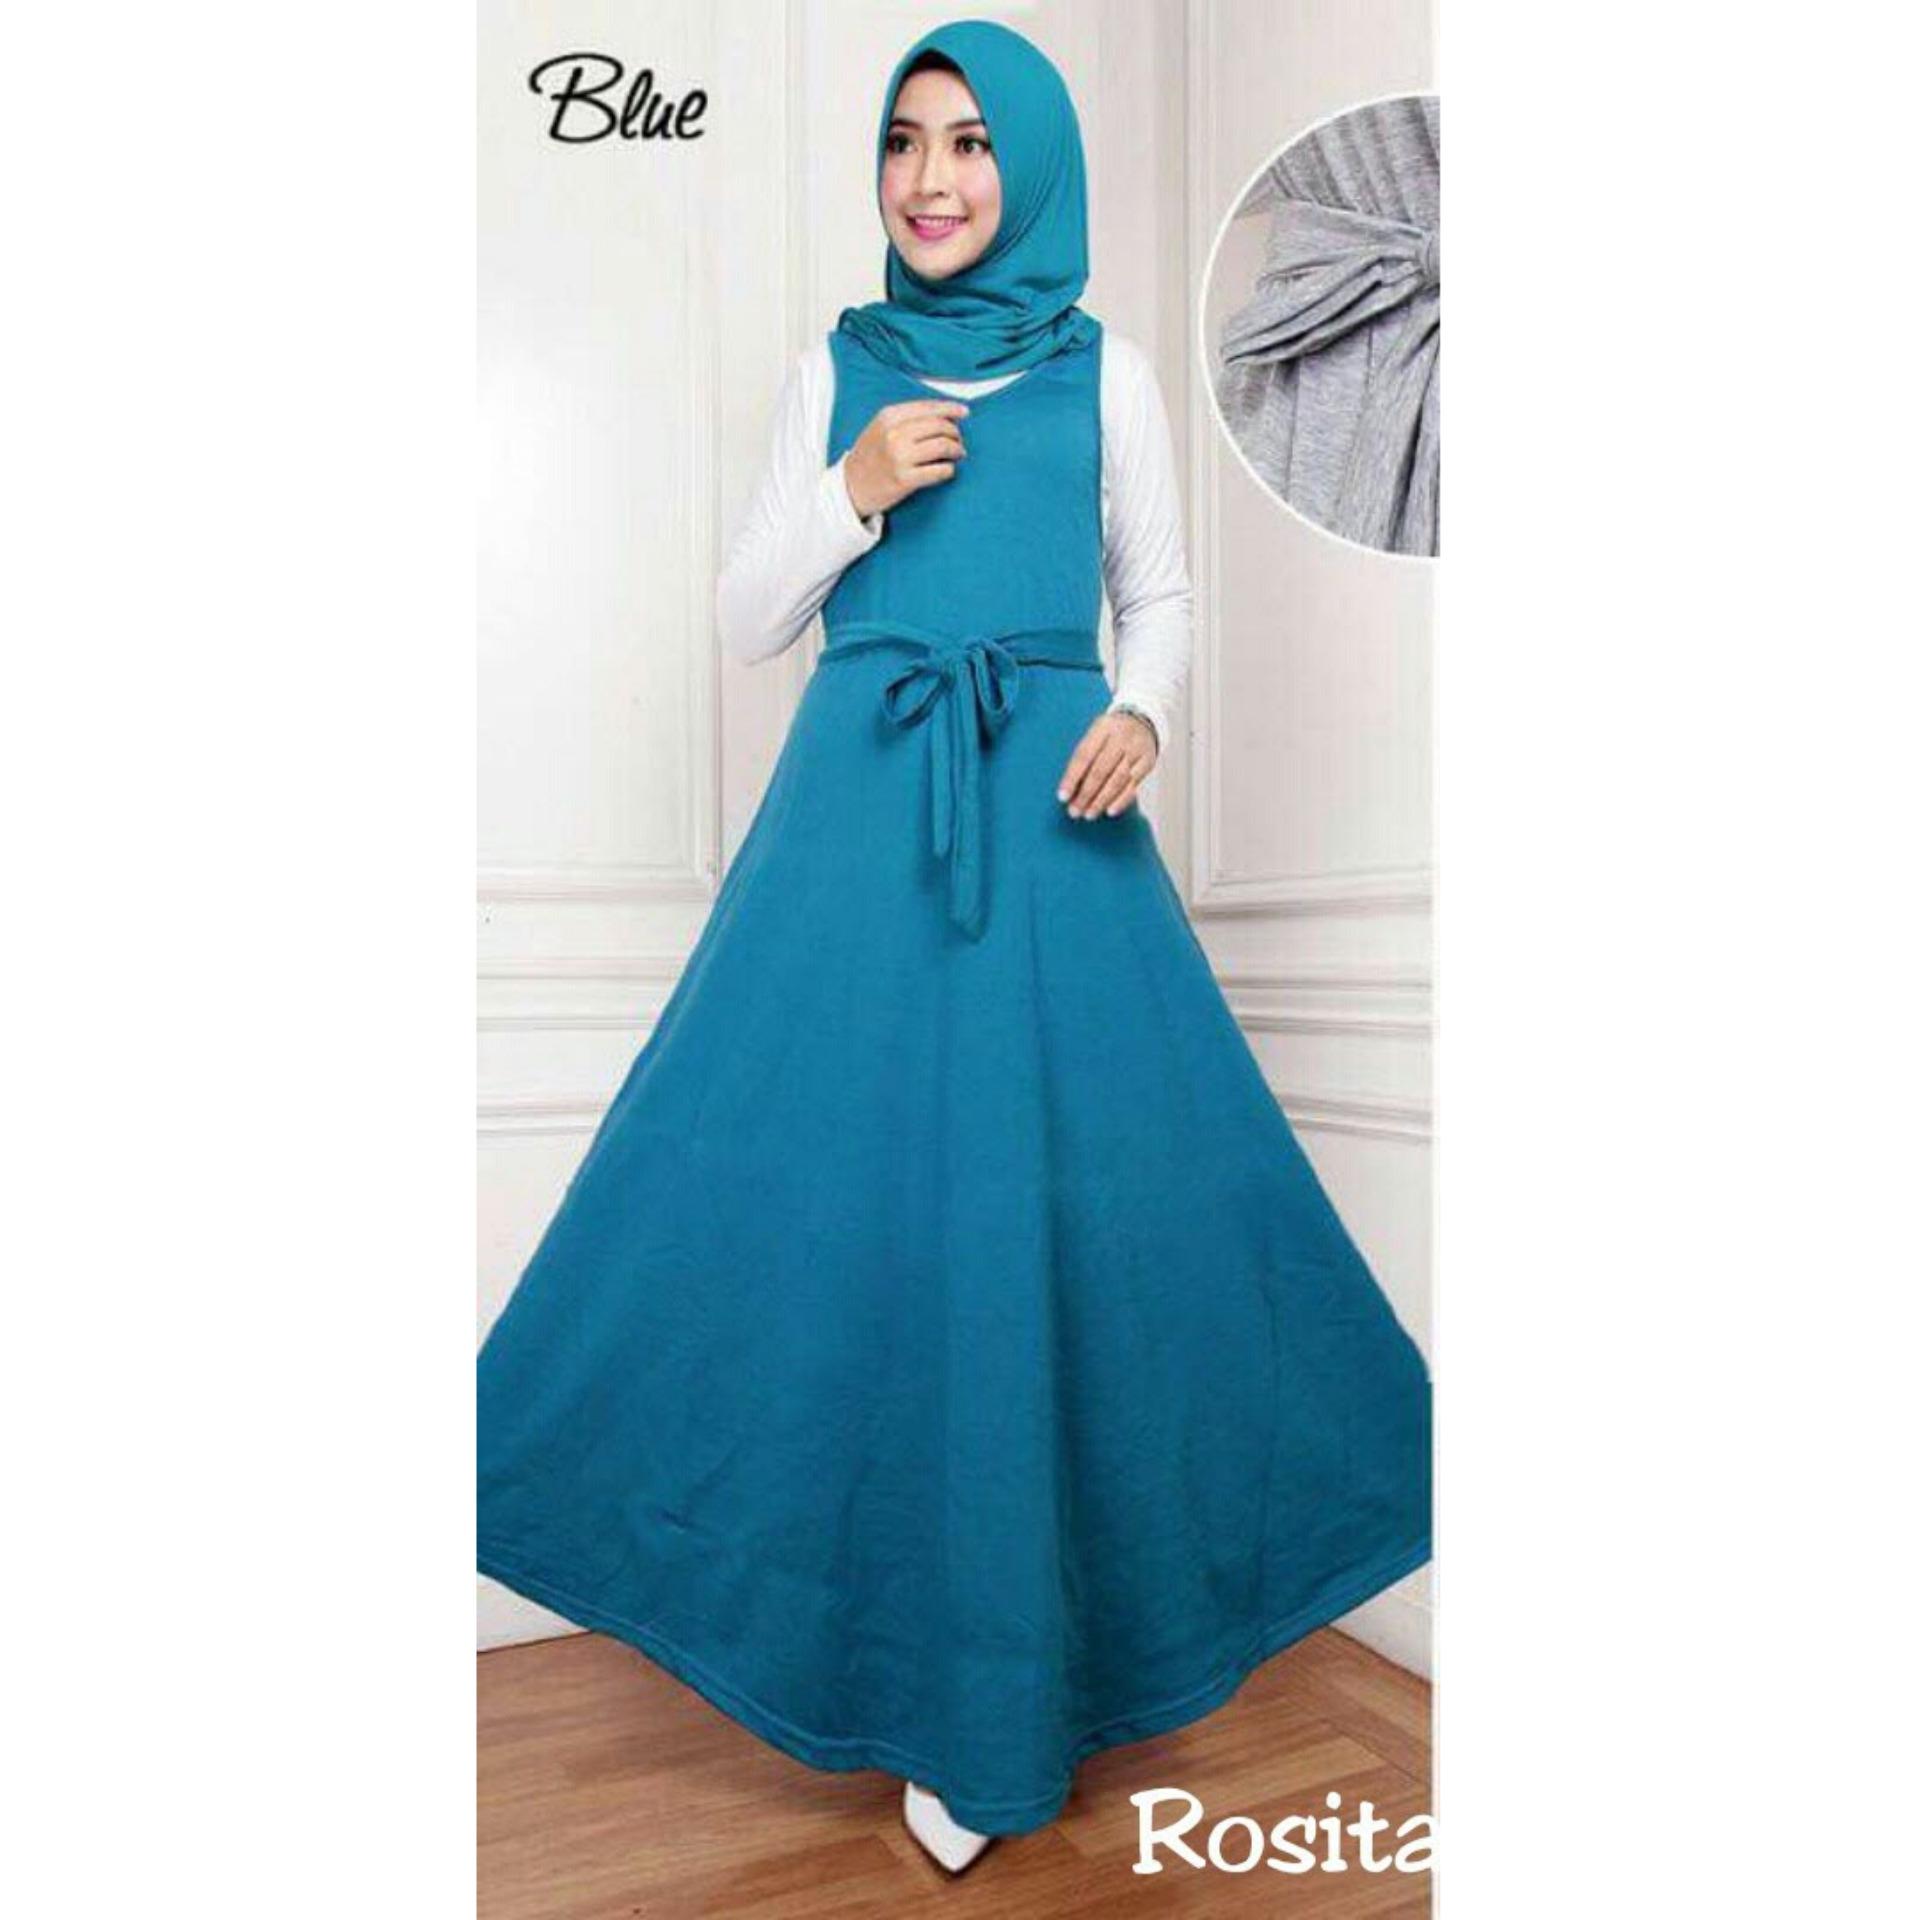 UC Dress Muslim 2 In 1 Rosi / Gamis Remaja Fashion Maxi / Syari Simple Elegant / Baju Muslim Wanita (Sitaro) SS - Biru D2C